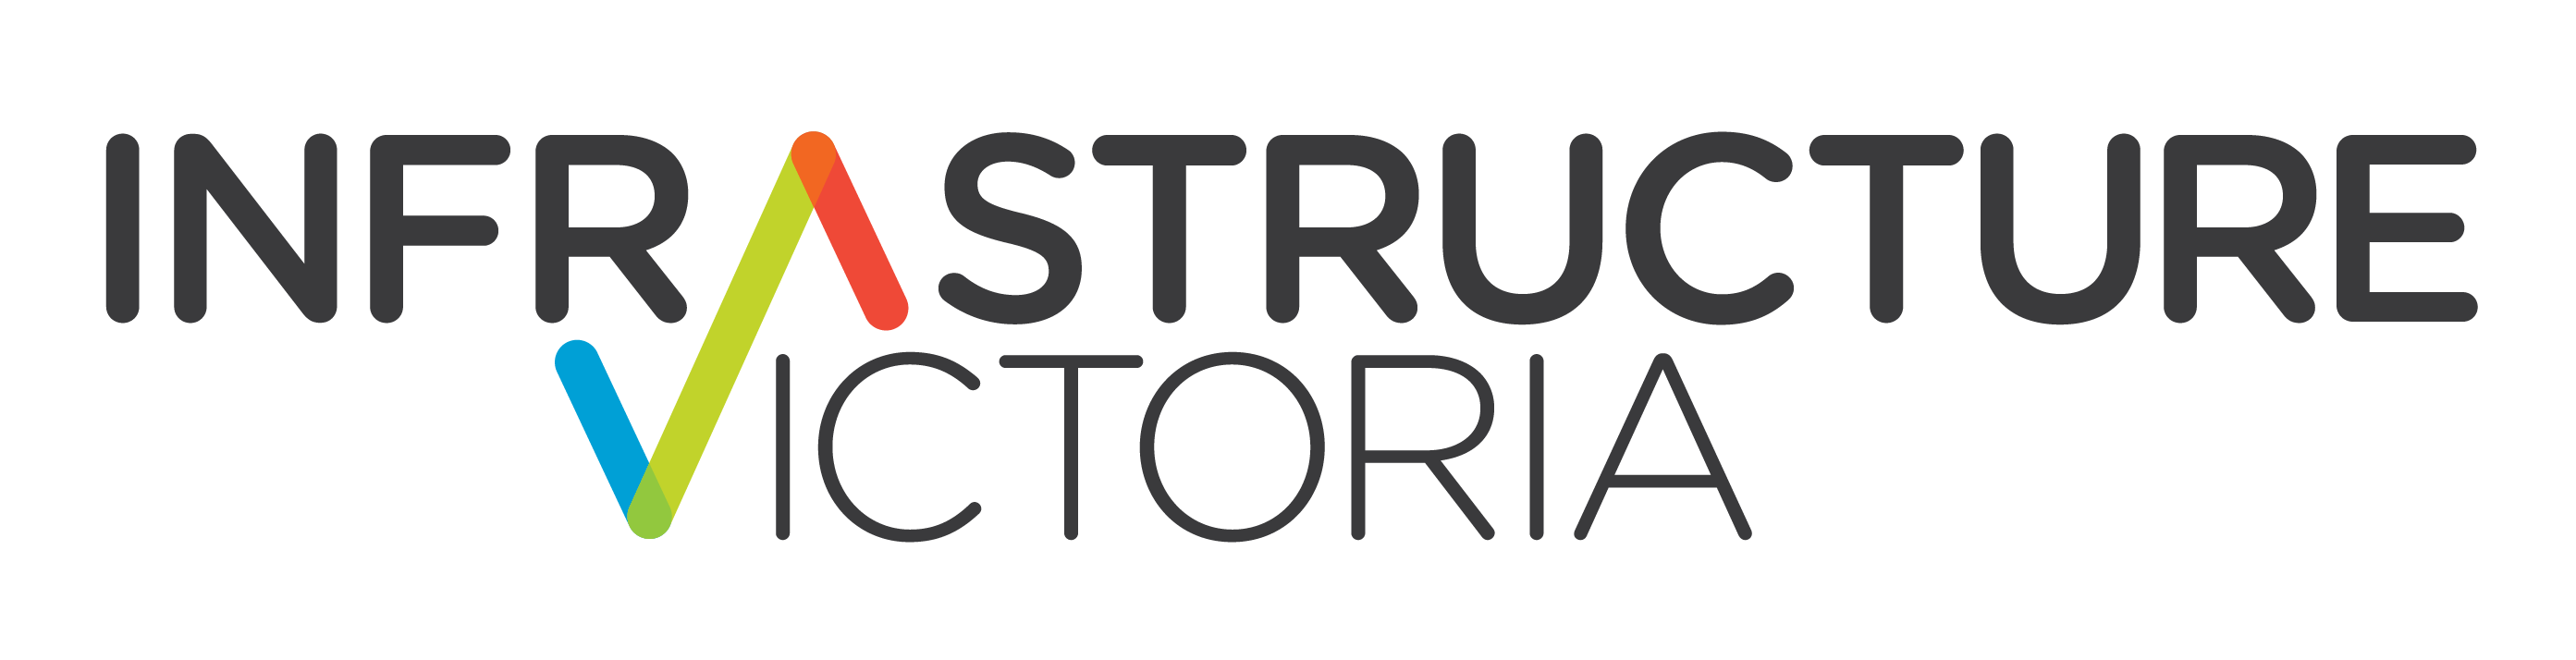 Victoria Logo - Home - Infrastructure Victoria